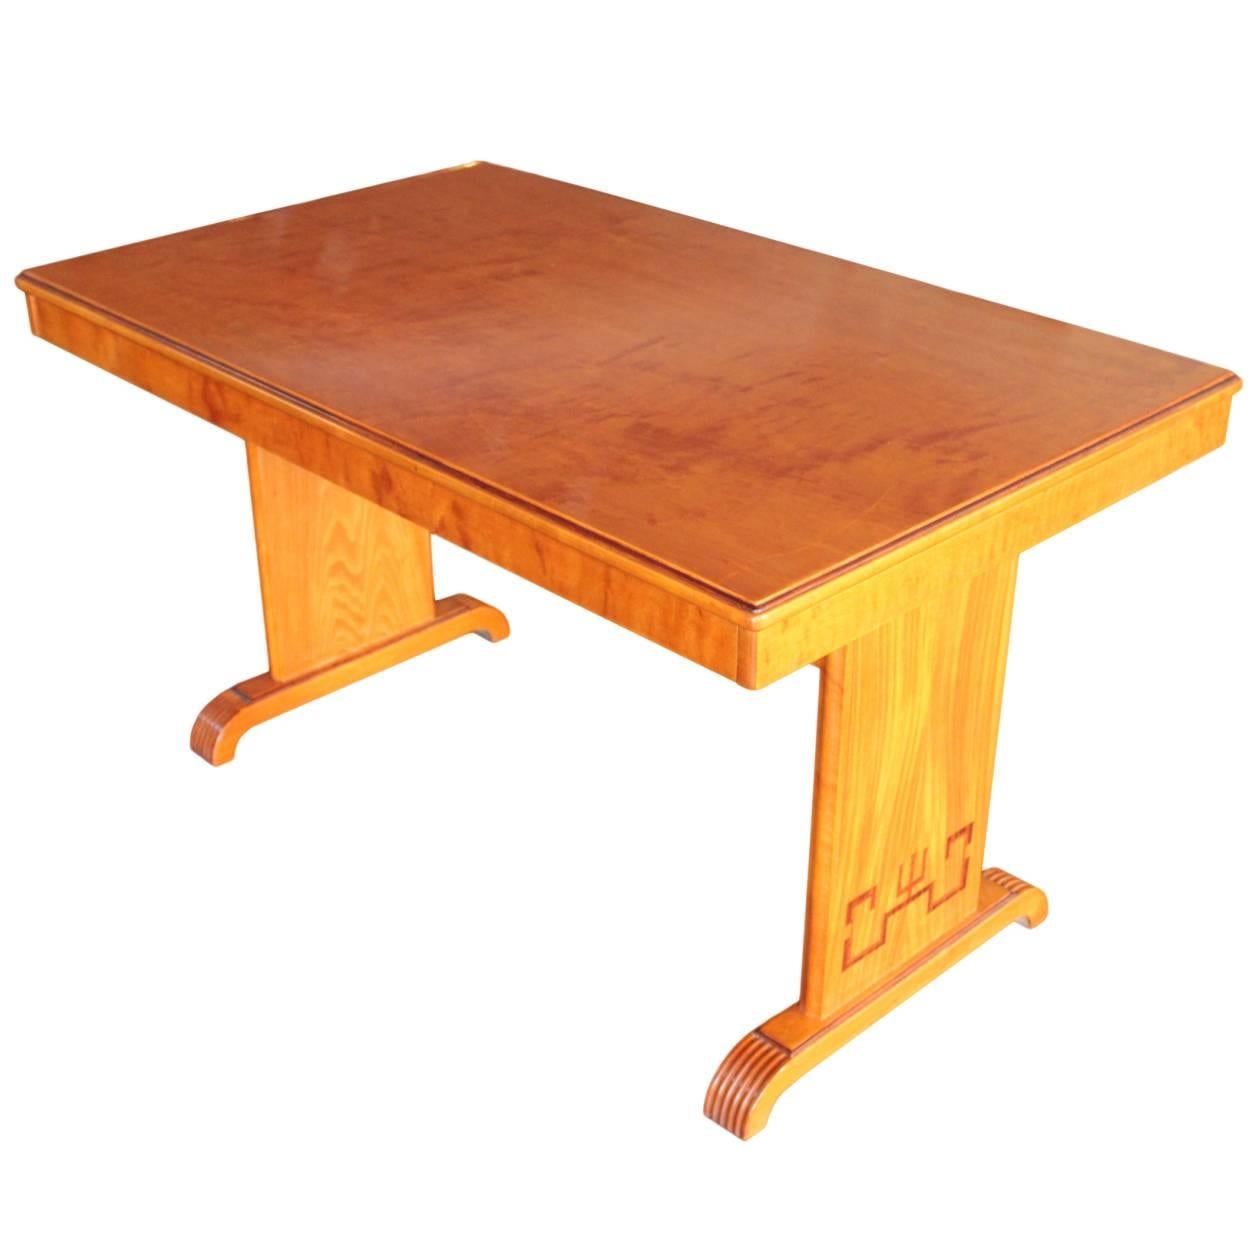 Swedish Art Deco Period Rectangular Inlaid Table For Sale